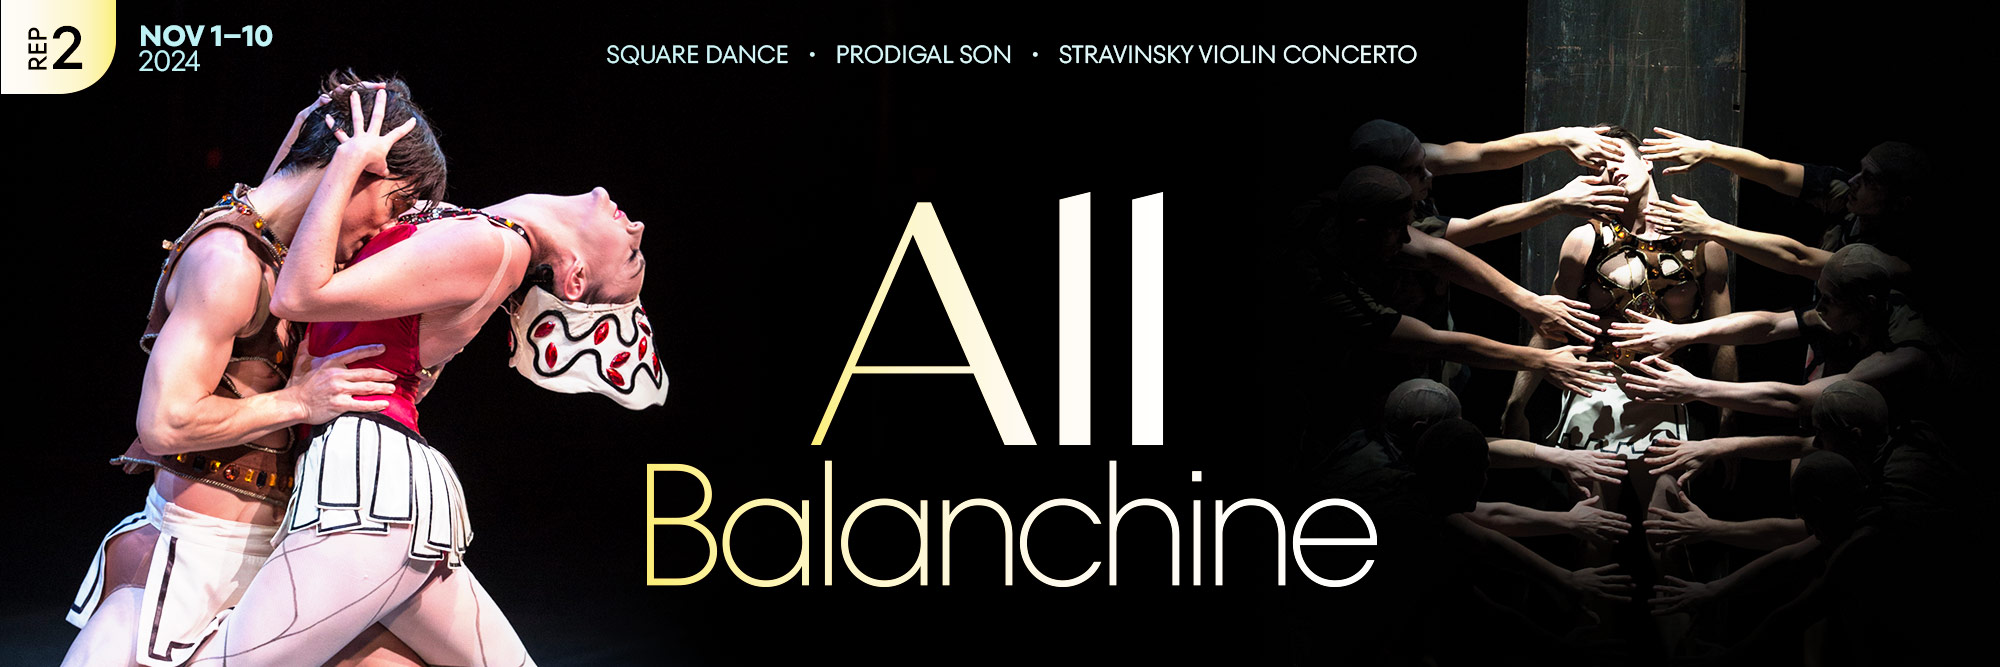 Rep 2: All Balanchine: November 1 - 10, 2024